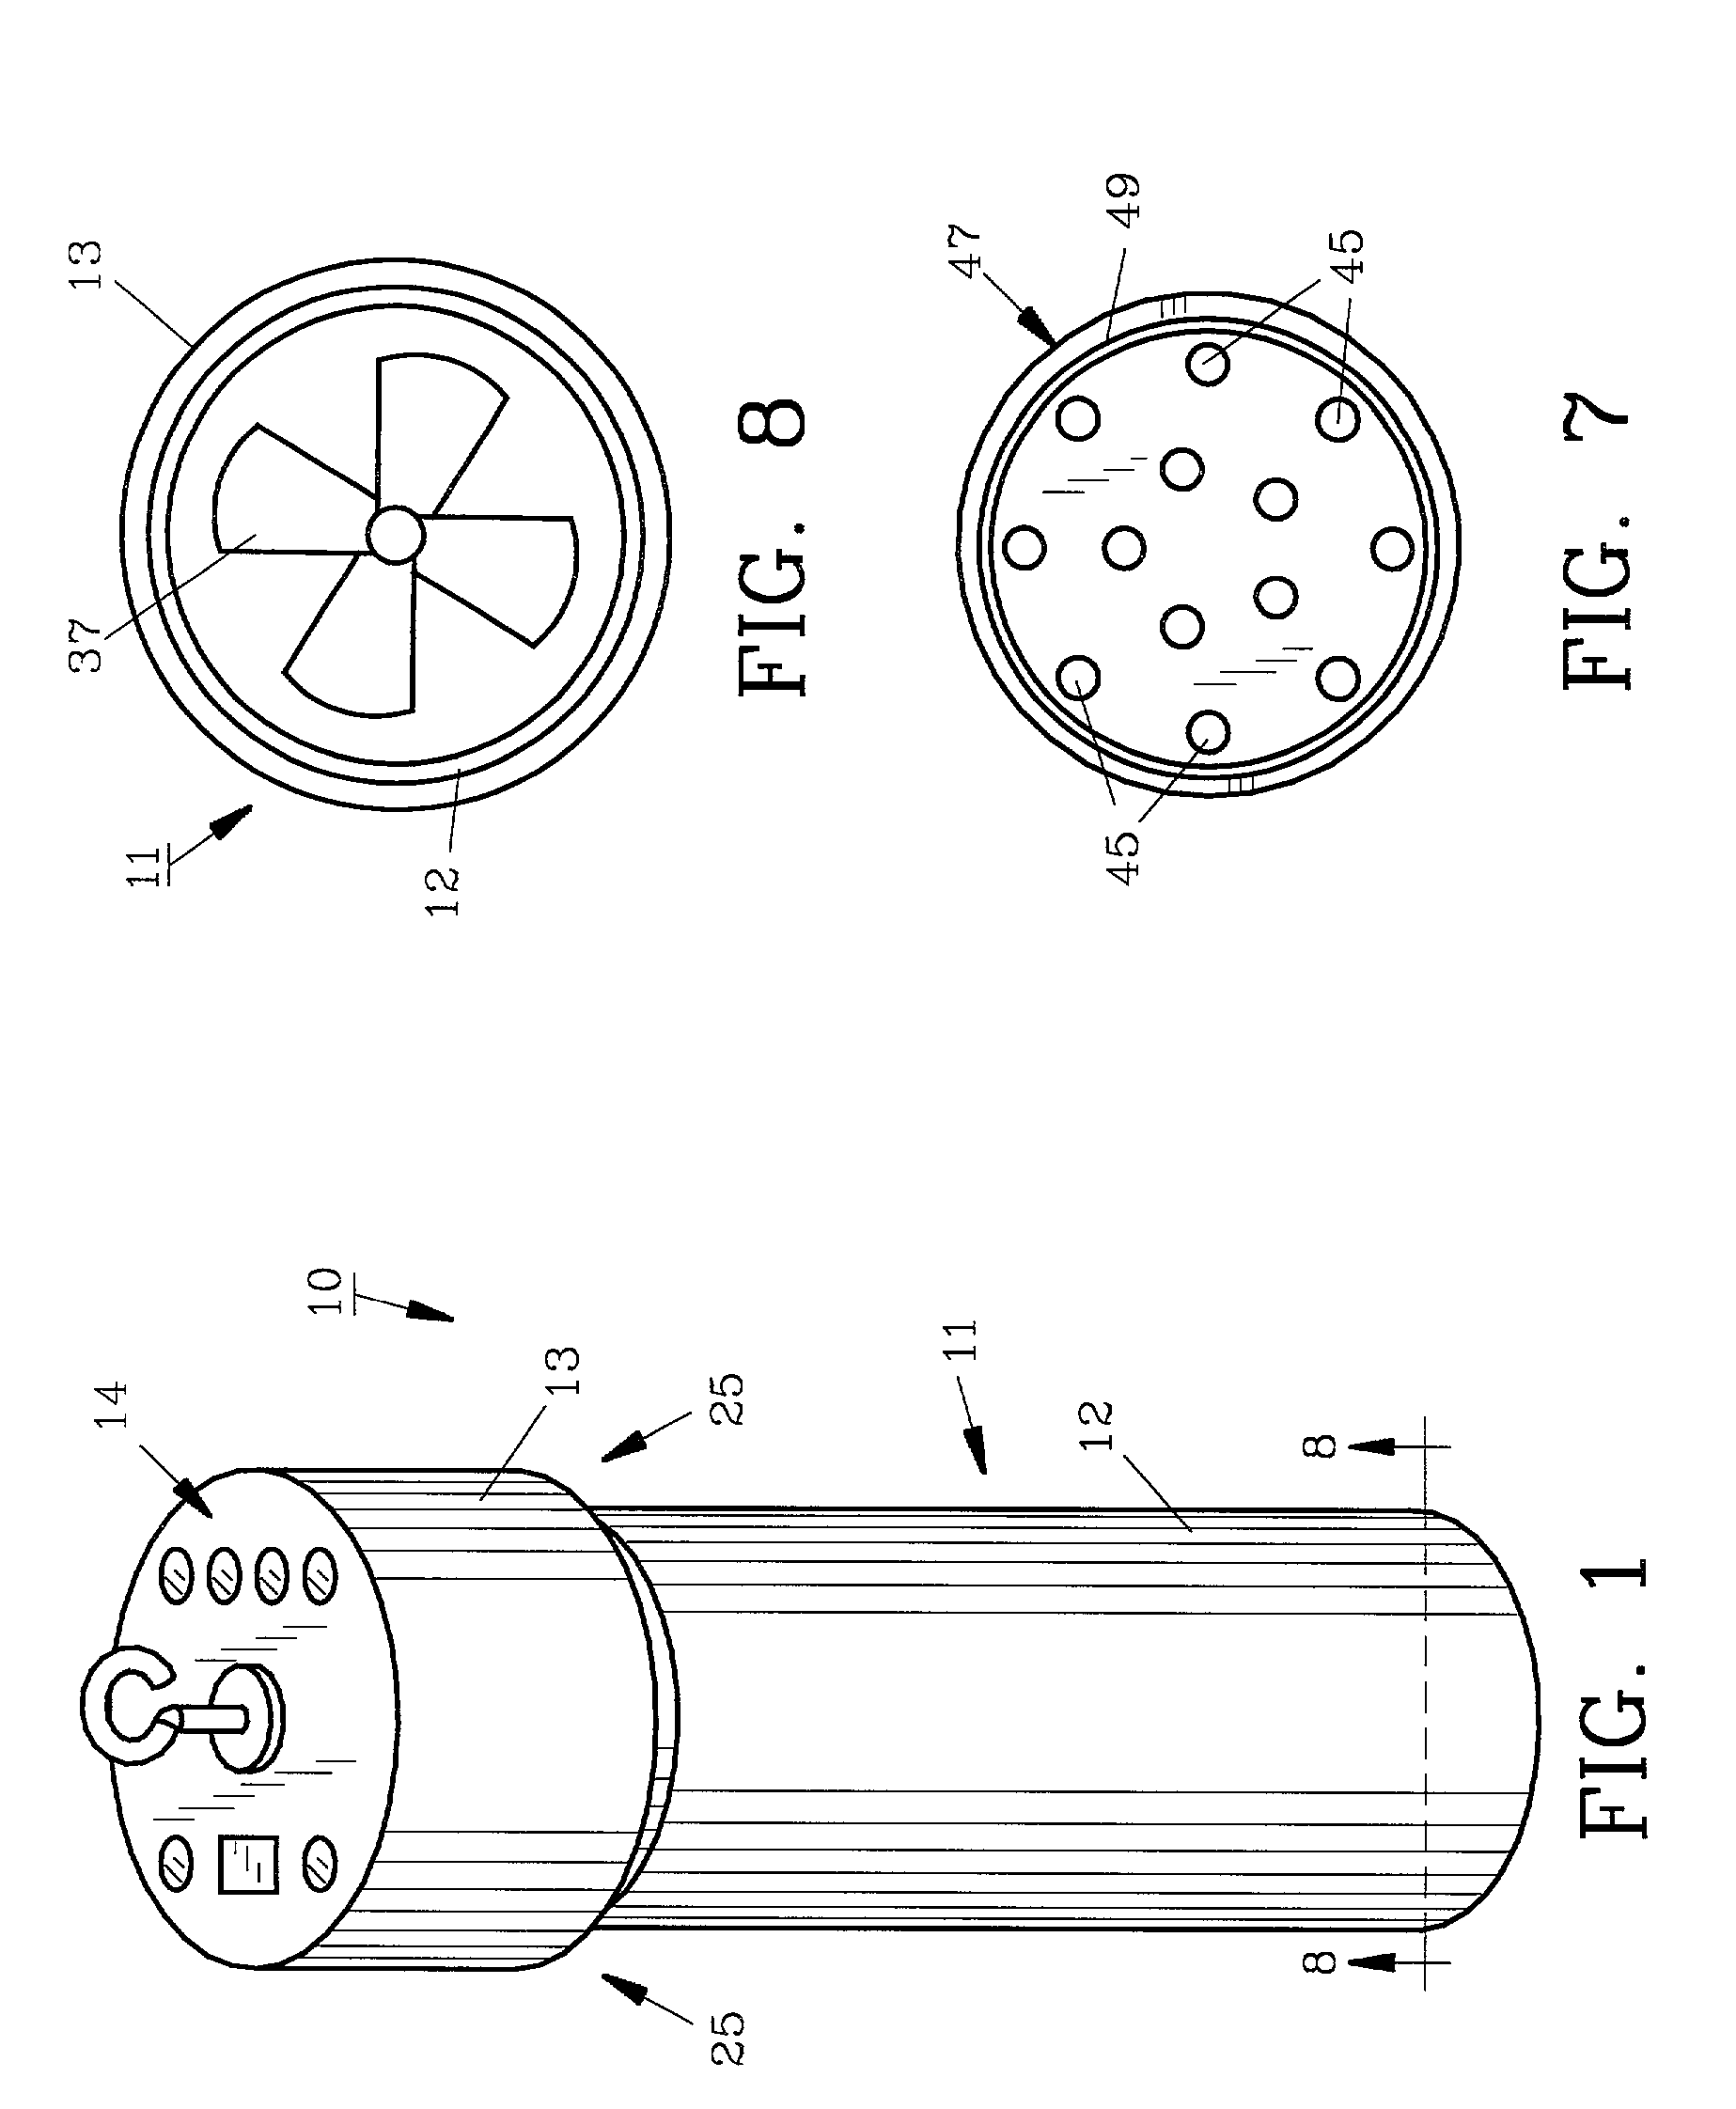 Scent dispenser and method